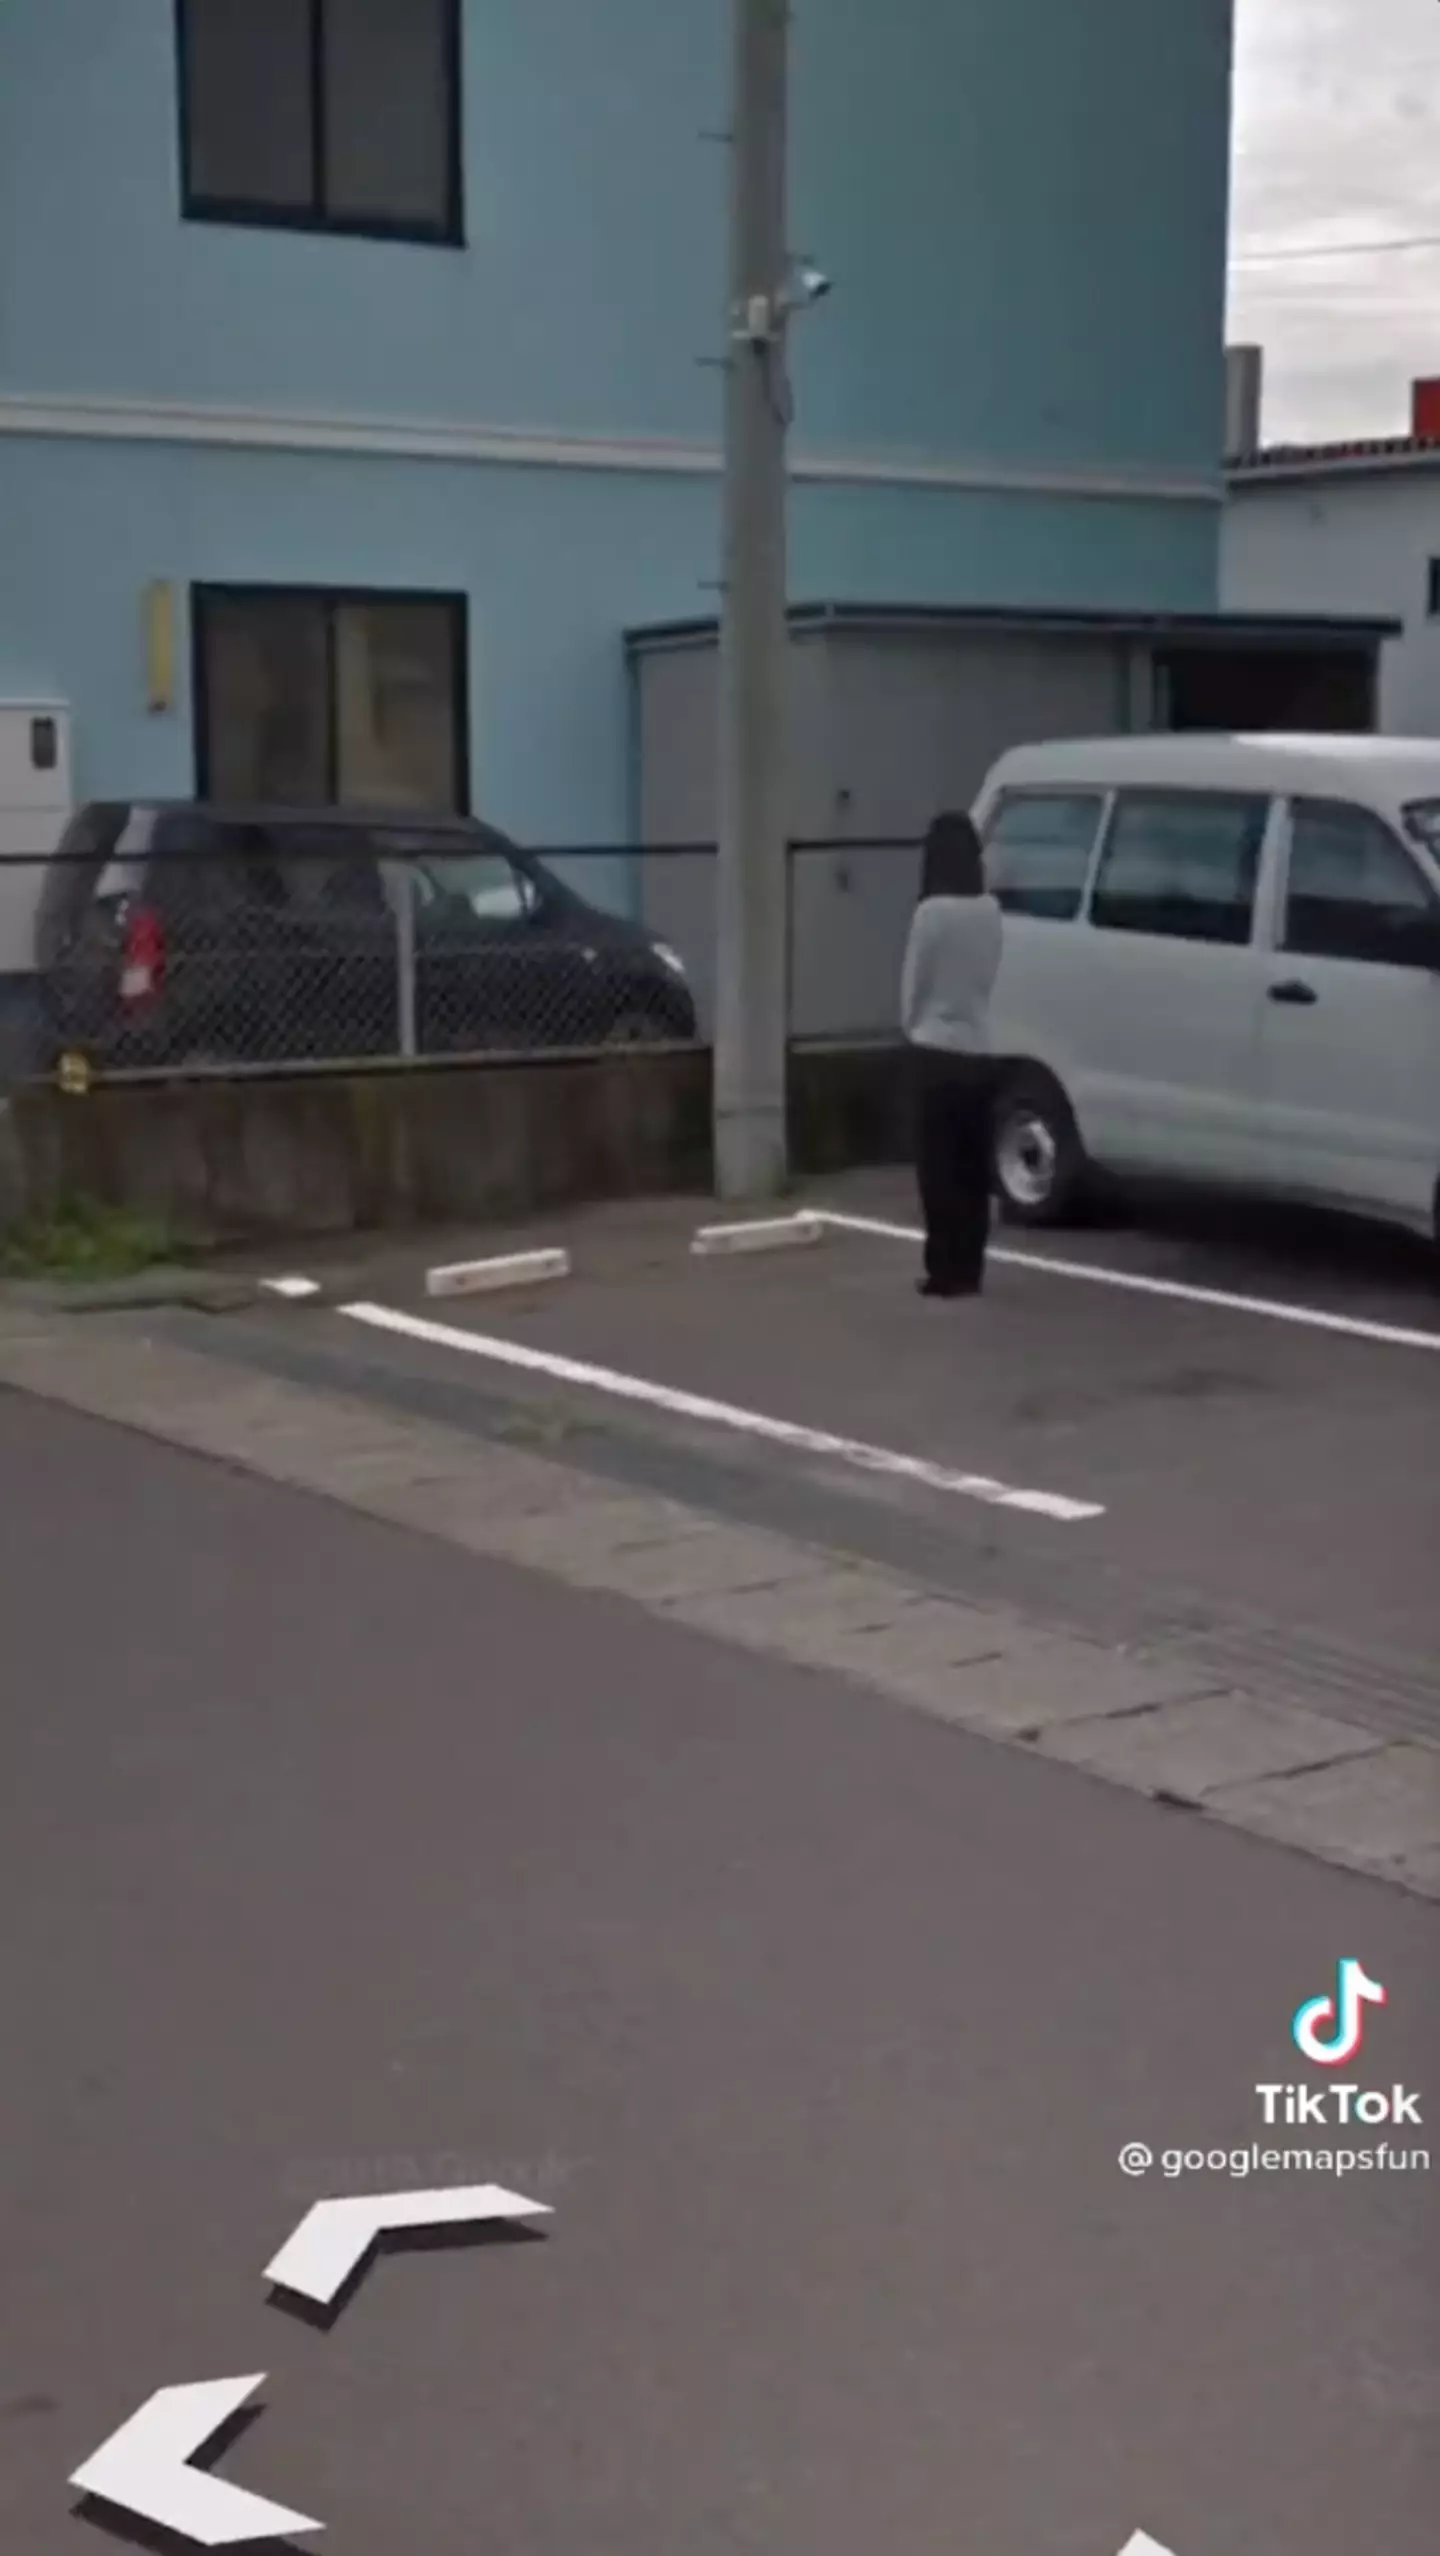 The unidentifiable person in Fukushima. (@googlemapsfun/TikTok)